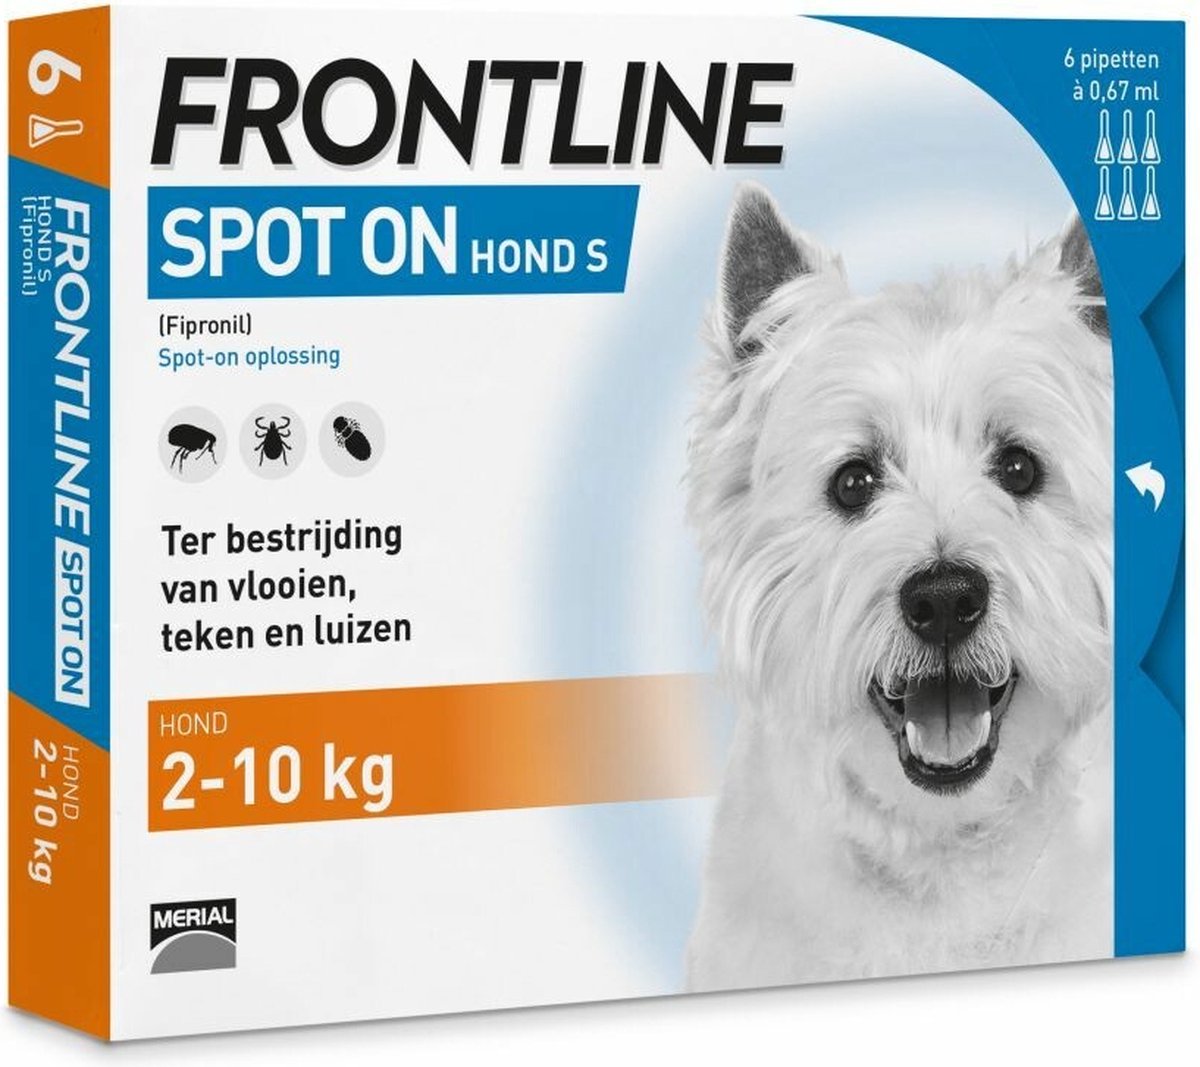 Frontline Hond Small - 6 Pipetten bol.com